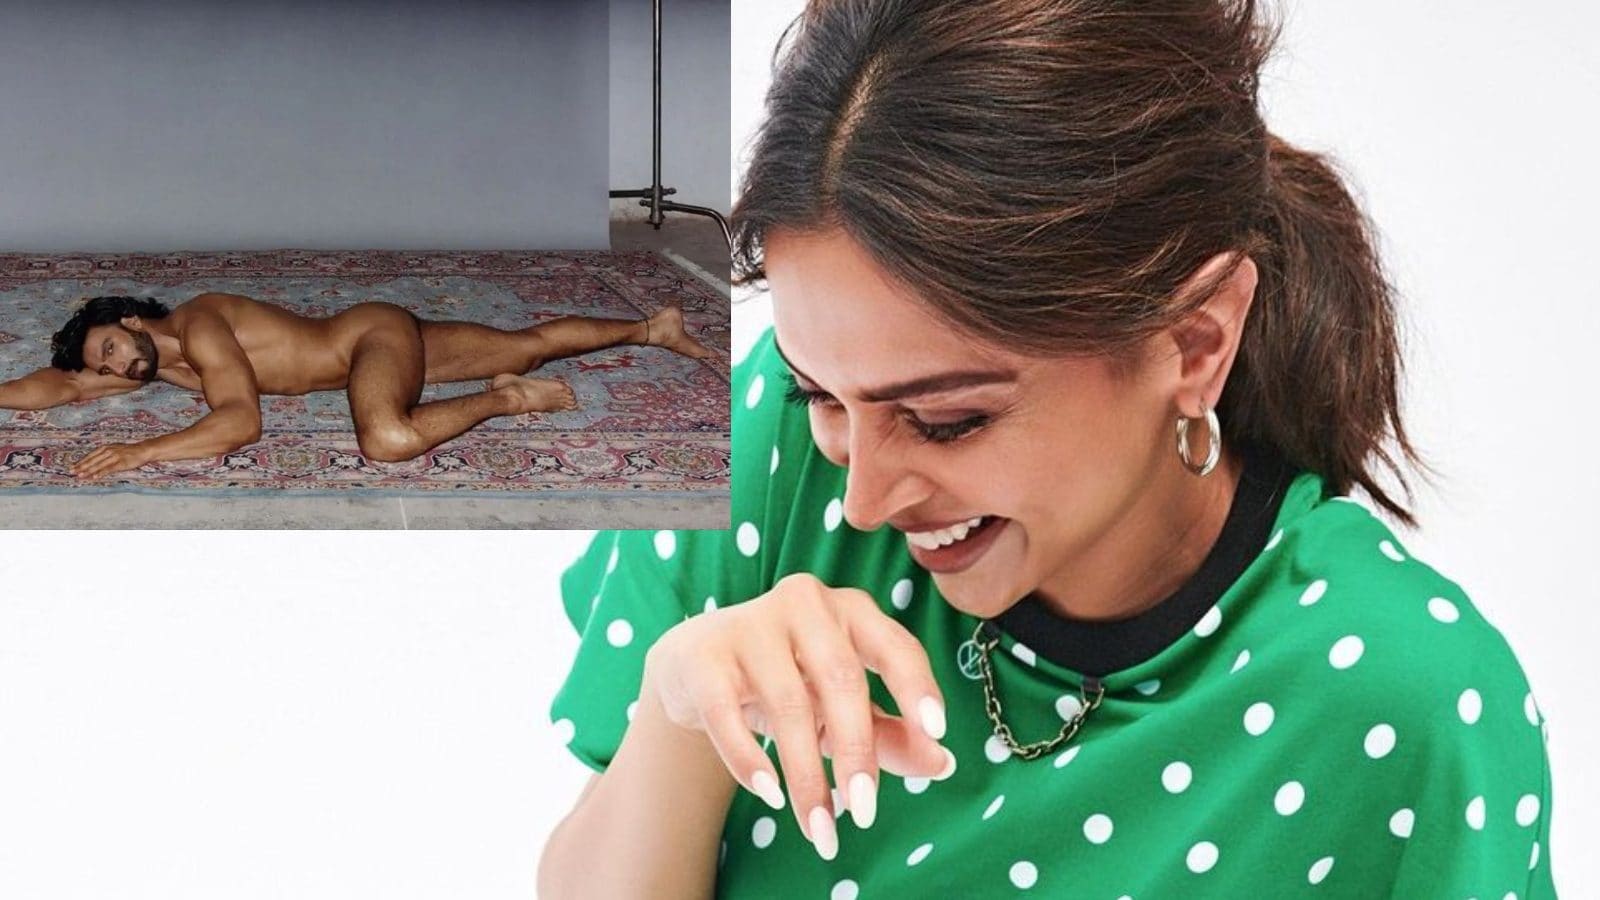 Kareena Kapoor Aur Shah Rukh Khan Ki Xnxx Video Full Hot Sexy - How Deepika Padukone Reacted to Husband Ranveer Singh's Super Nude  Photoshoot - News18